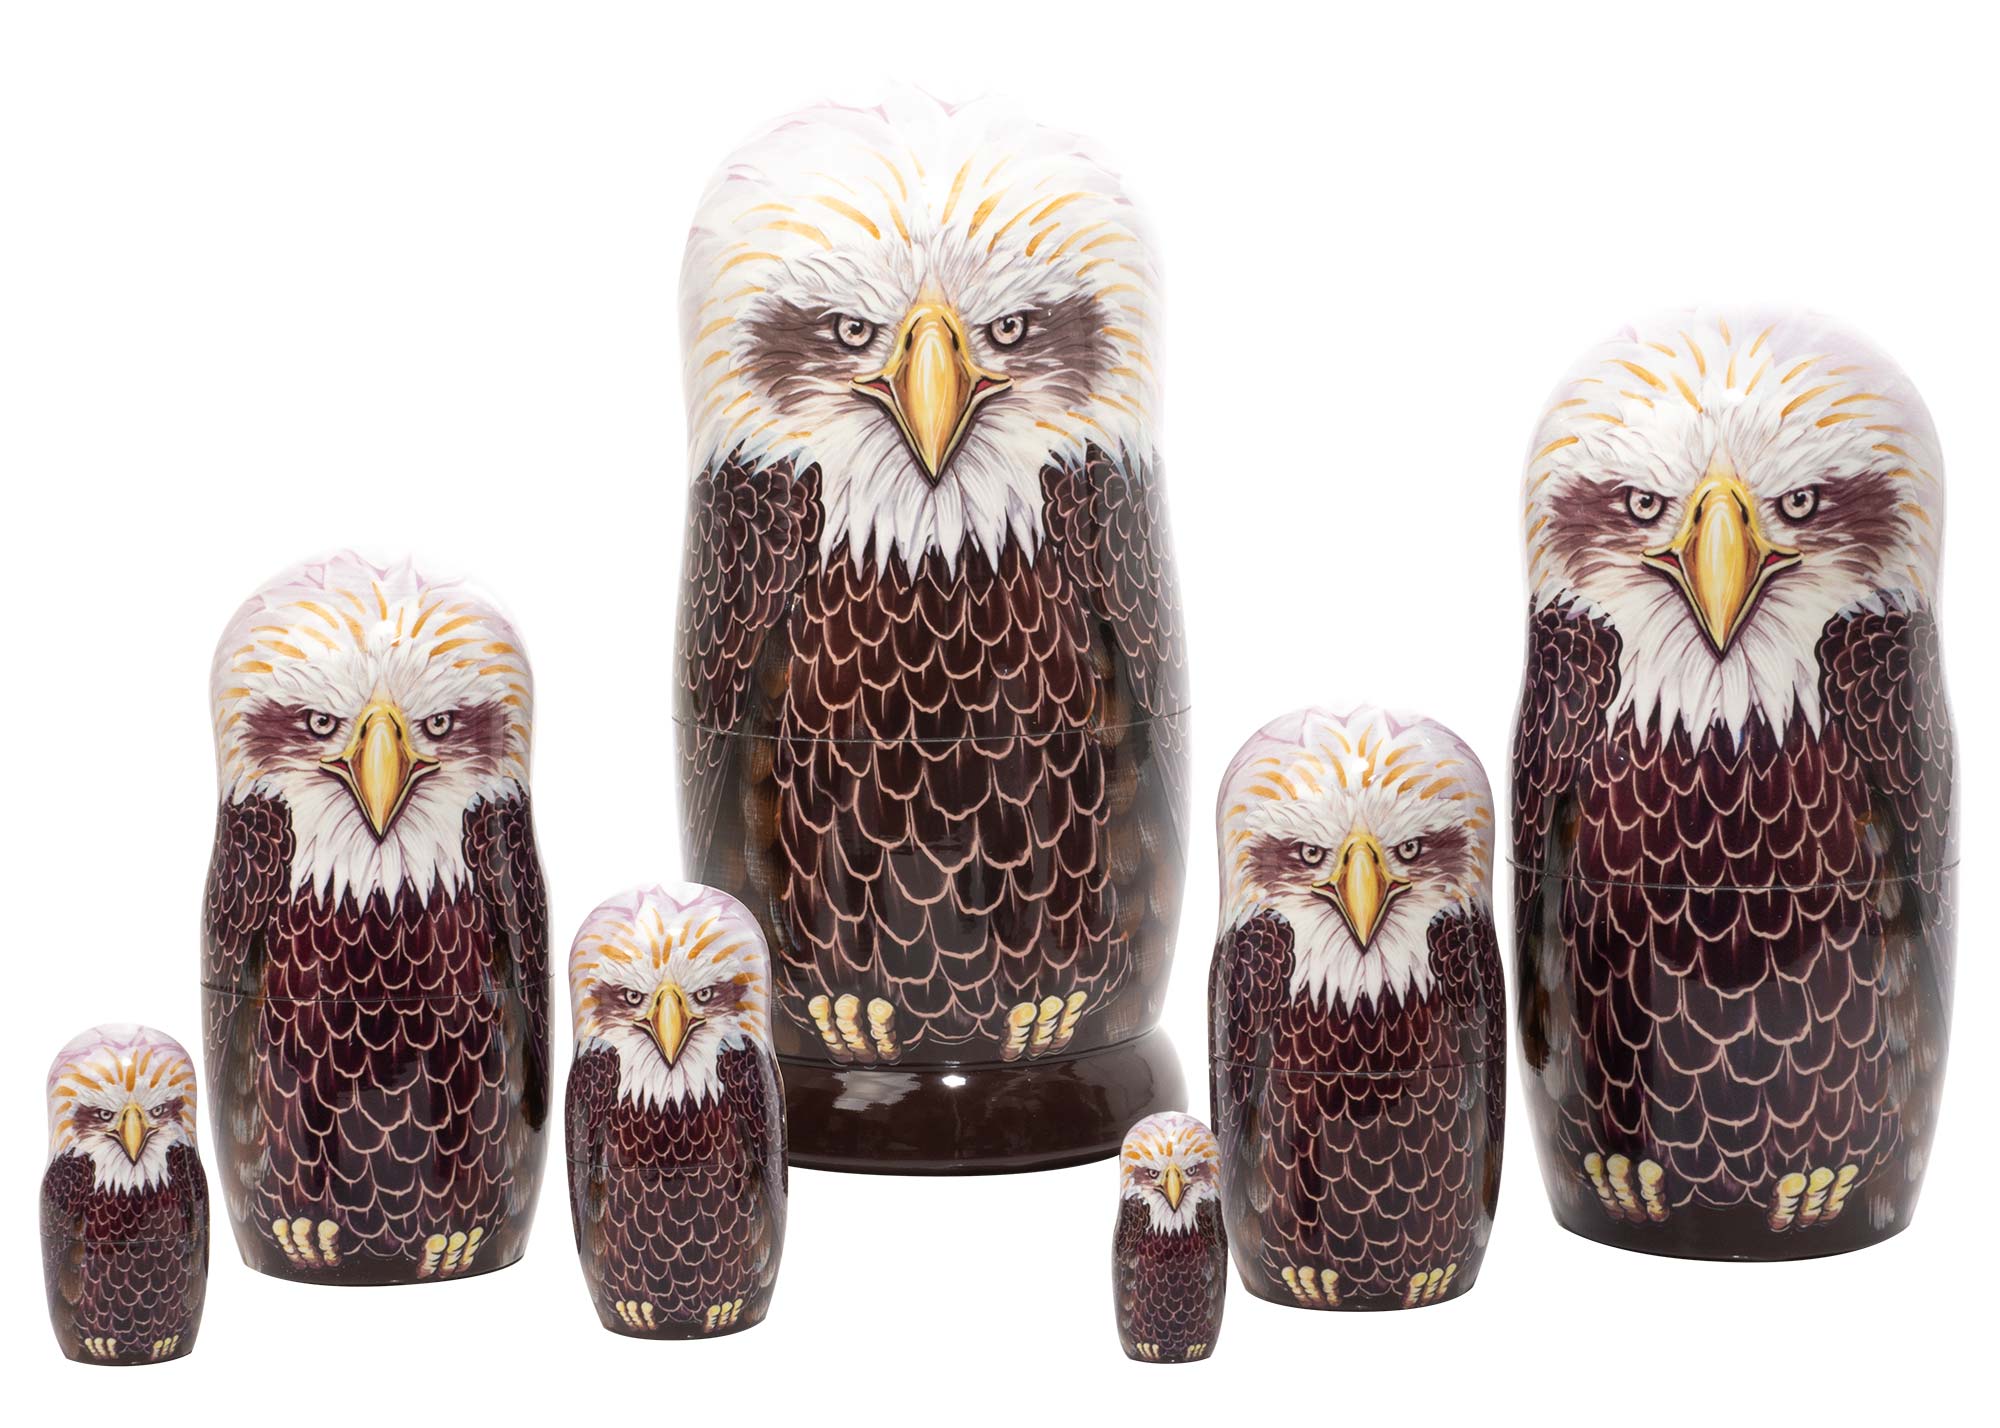 Buy Bald Eagle Nesting Doll 7pc./8" at GoldenCockerel.com